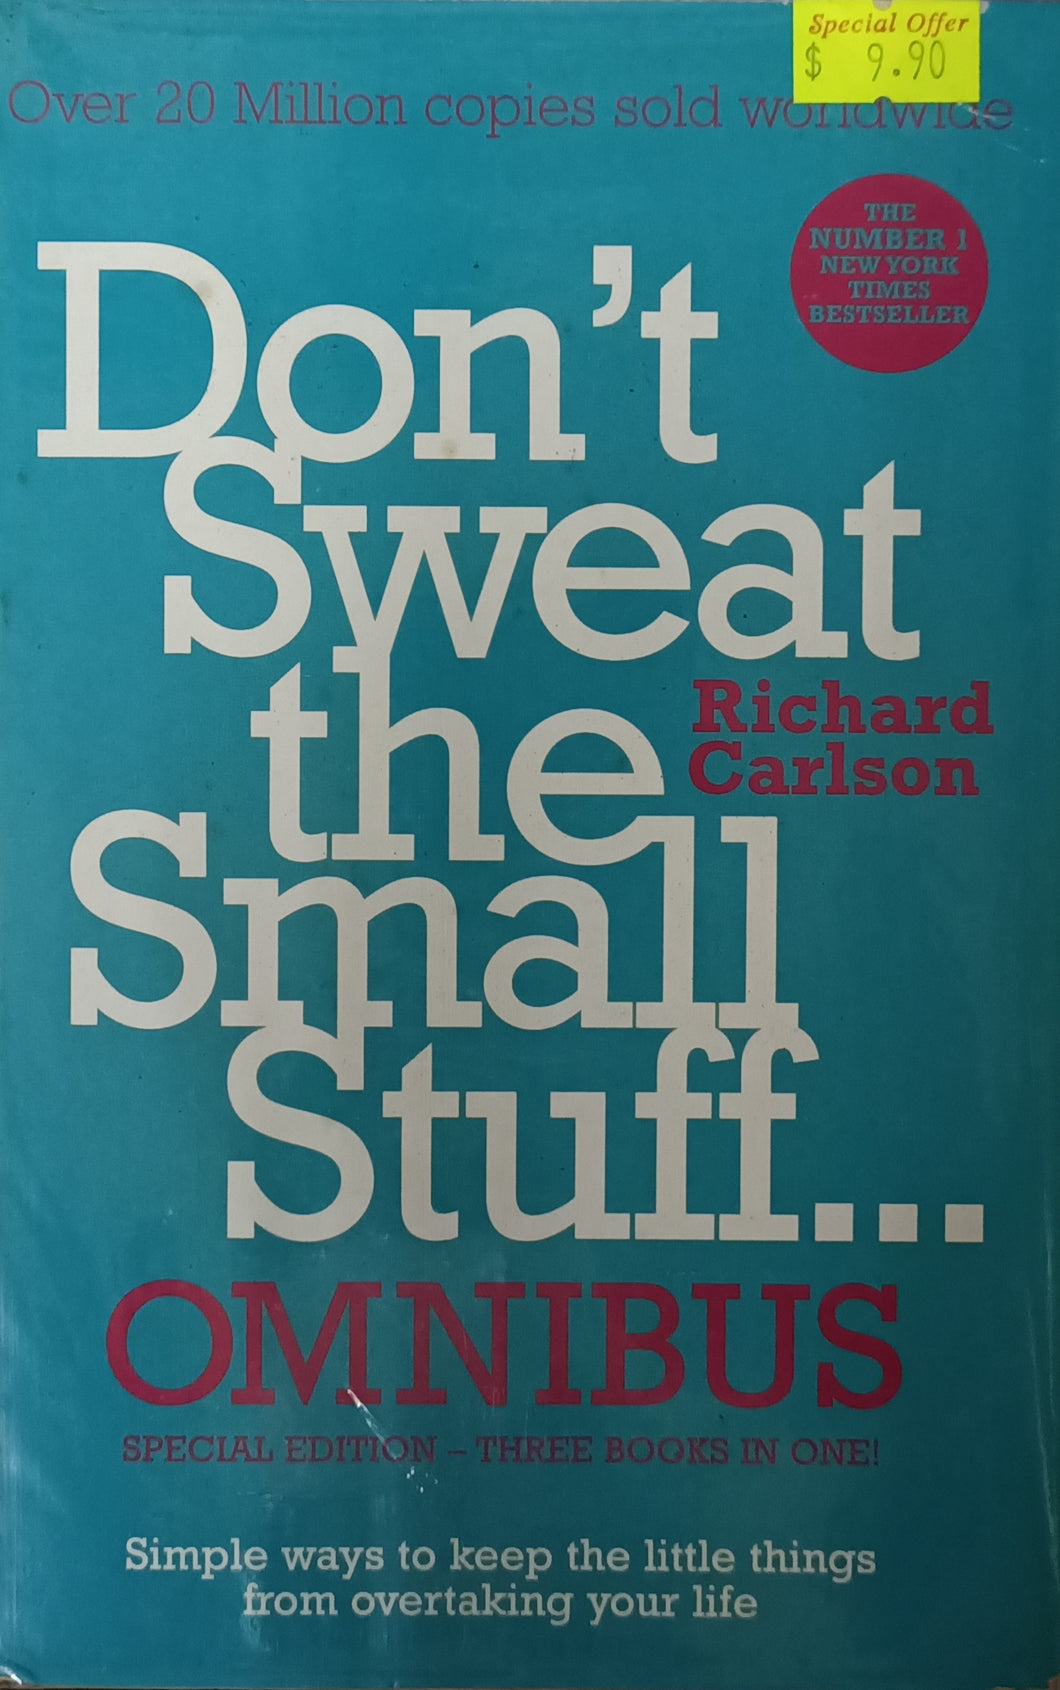 Don't Sweat the Small Stuff... Omnibus - Richard Carlson